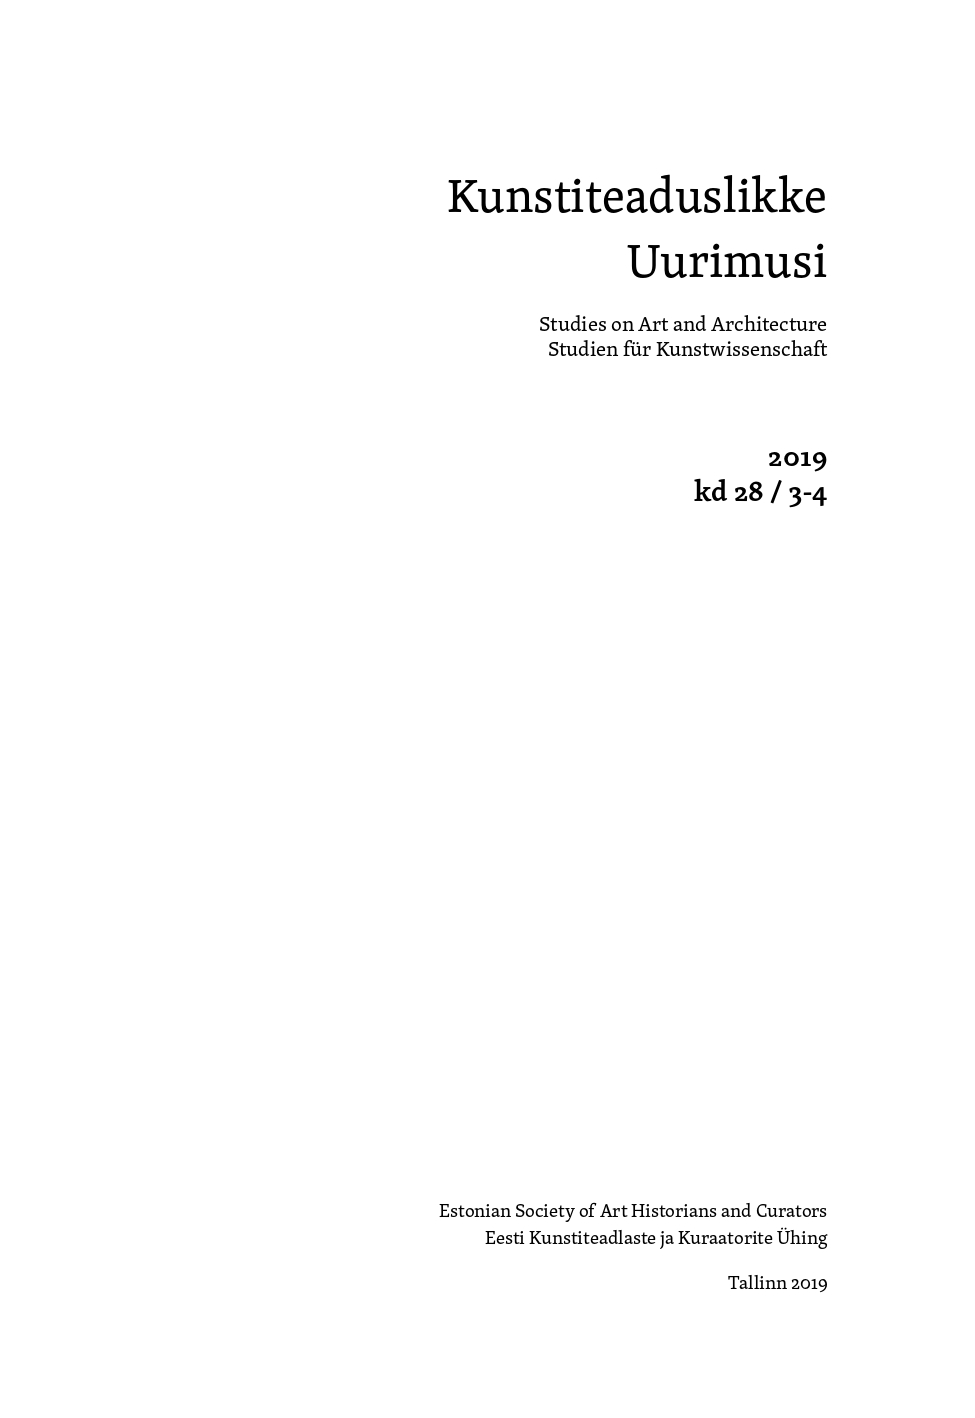 Letters by Evi Pihlak and Hanno Kompus to Konrad Mägi Cover Image